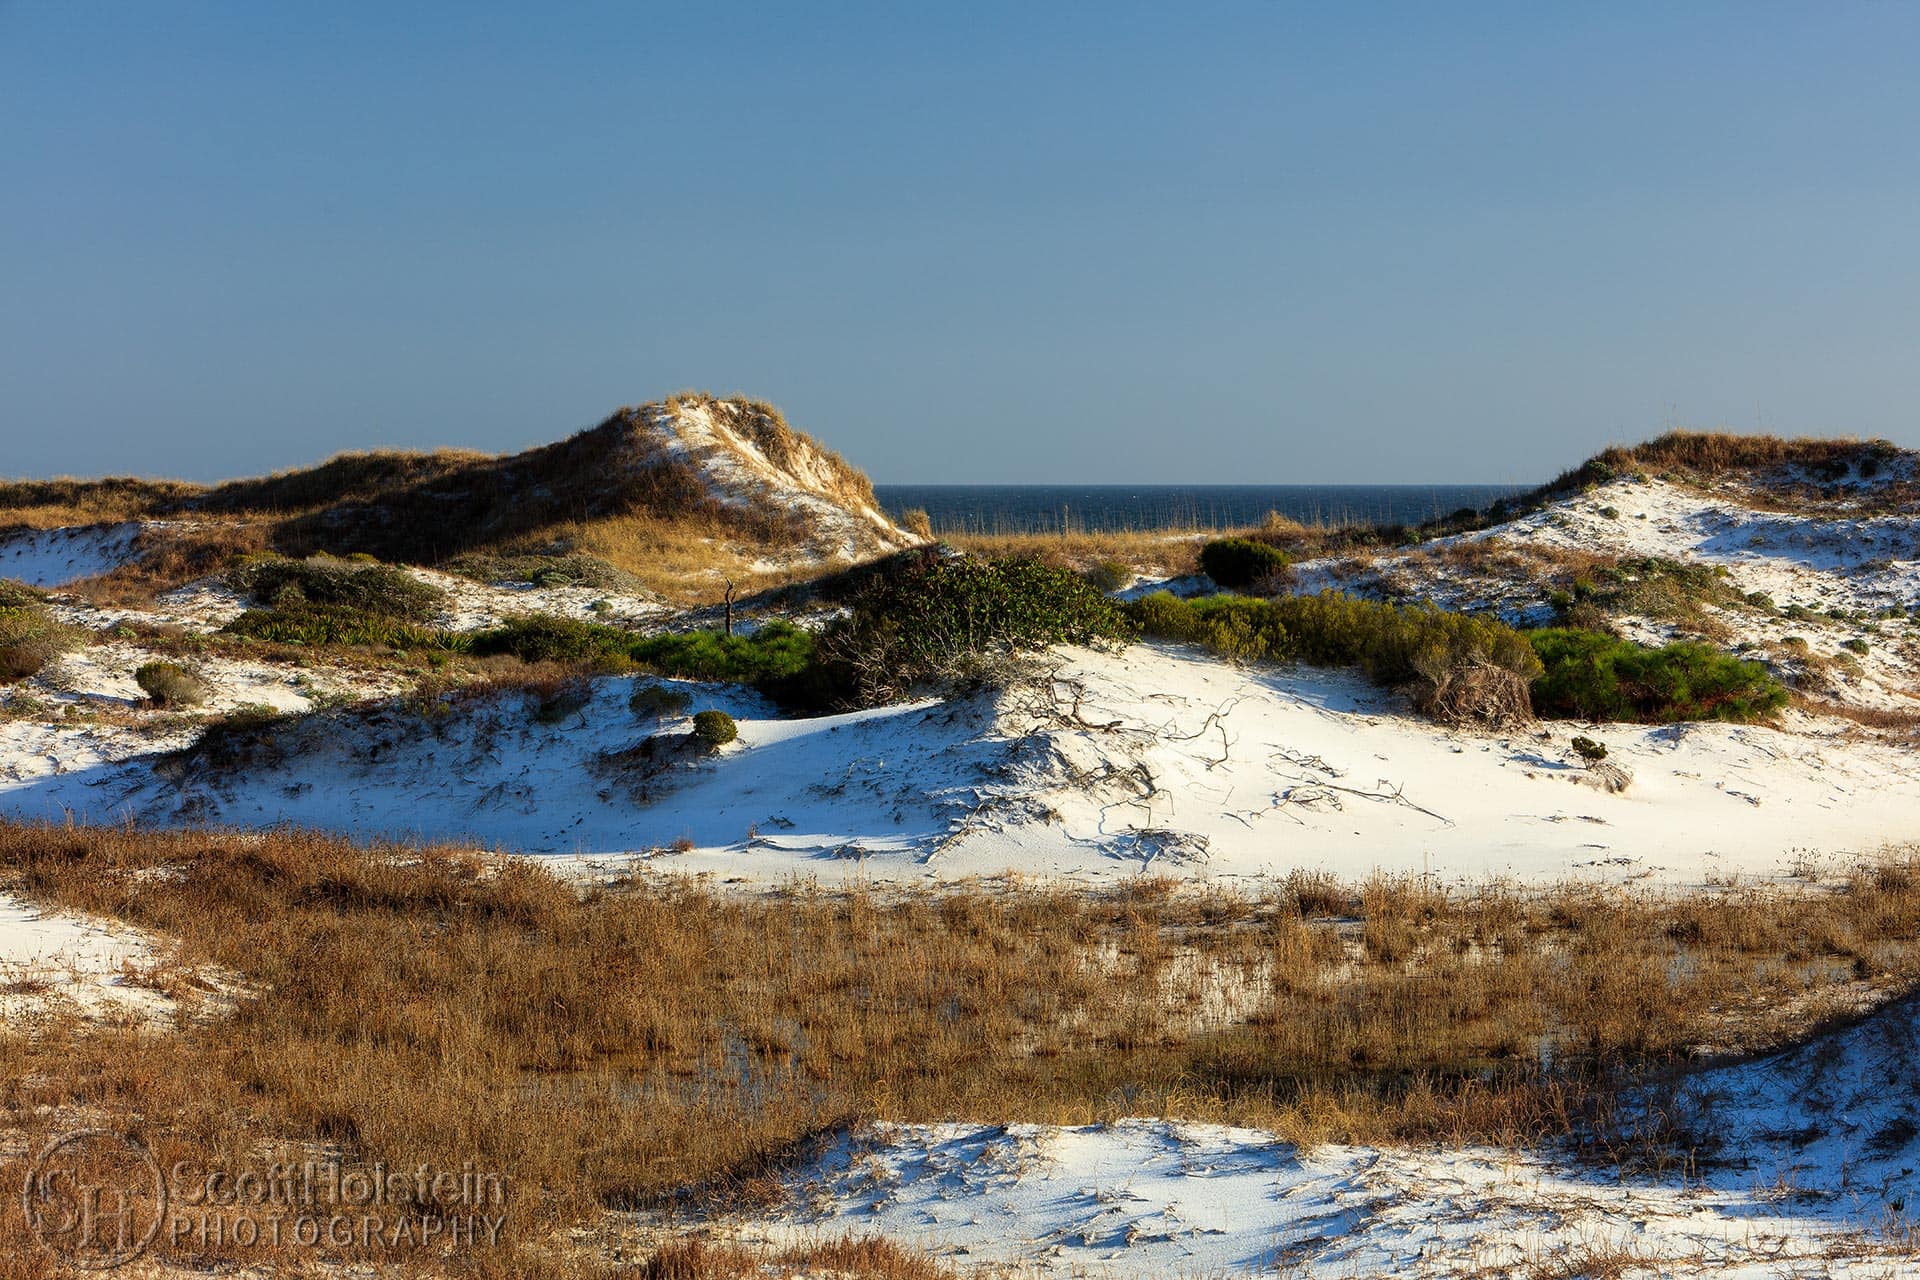 Topsail Hill Preserve State Park sand dunes in Santa Rosa Beach, Florida.